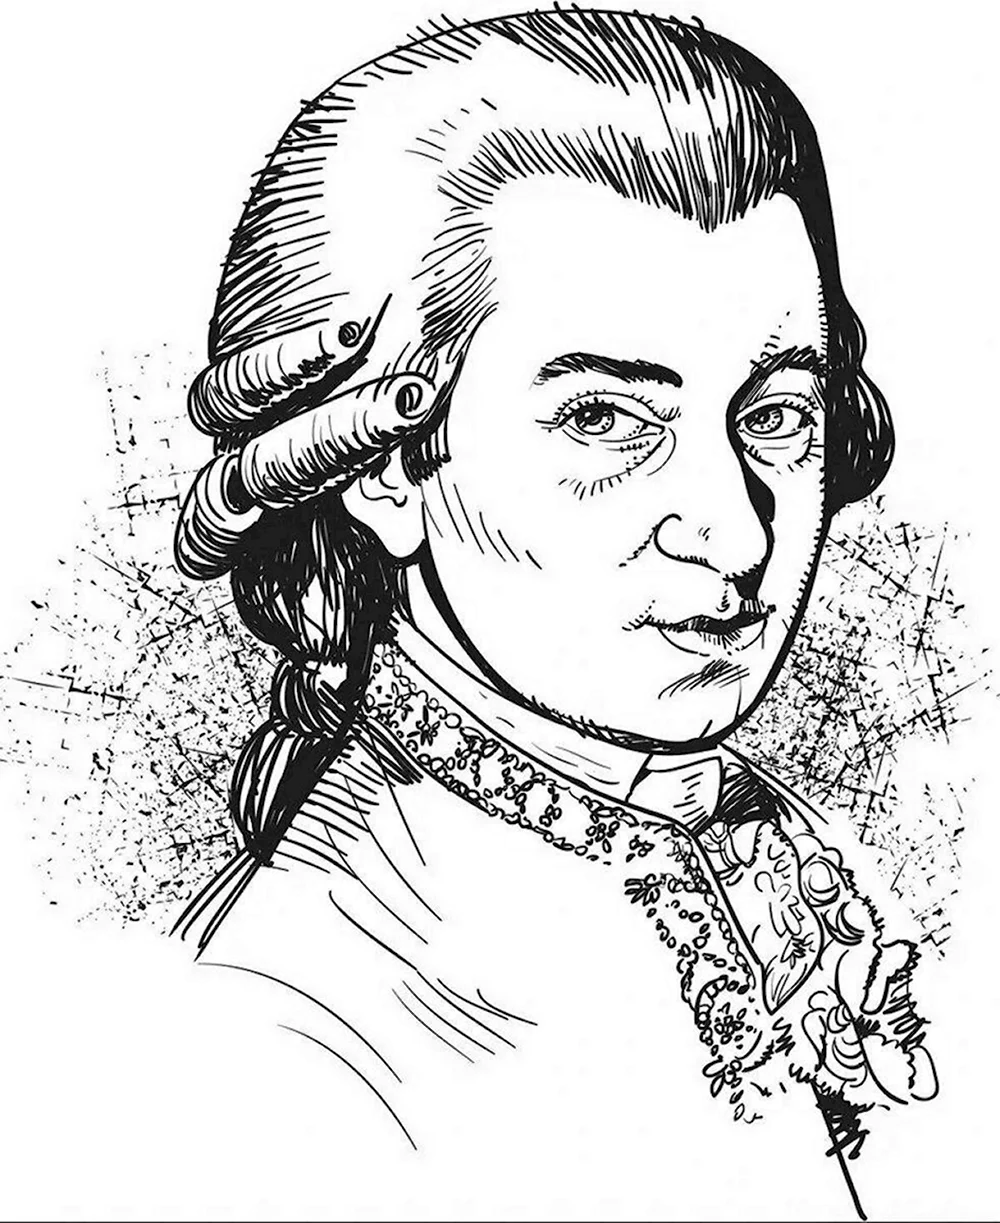 Вольфганг Амадей Моцарт 1756-1791